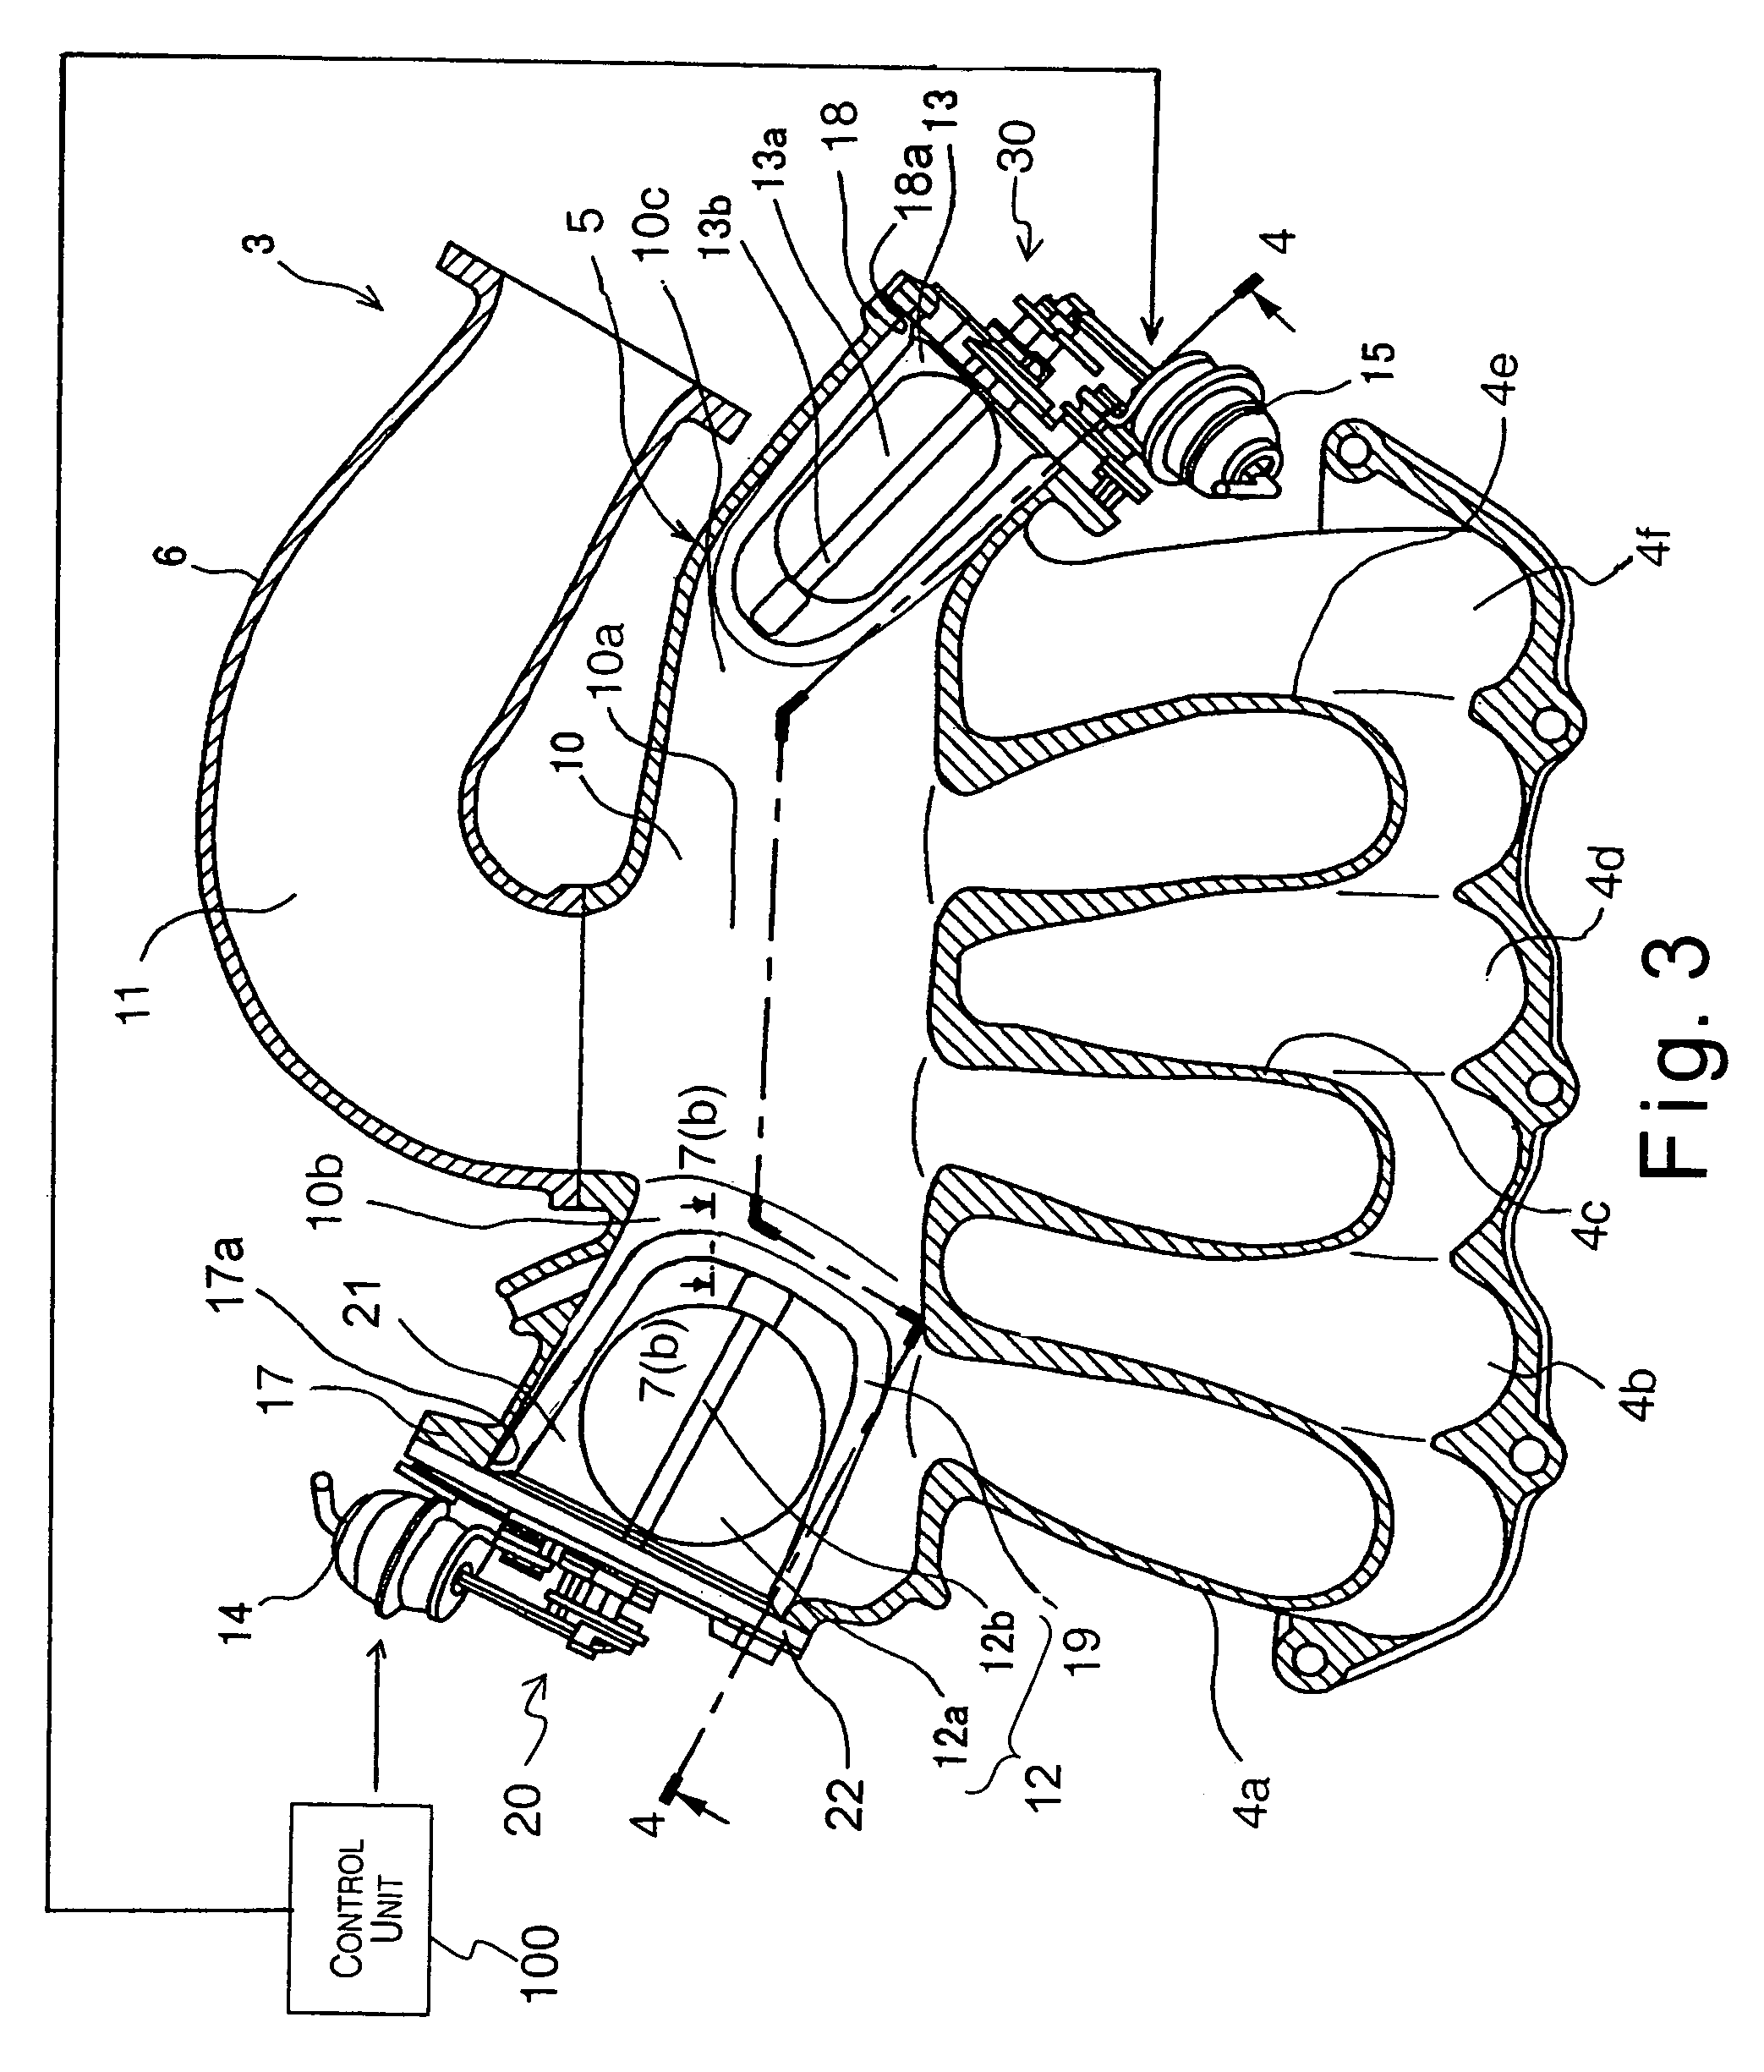 Engine air intake device